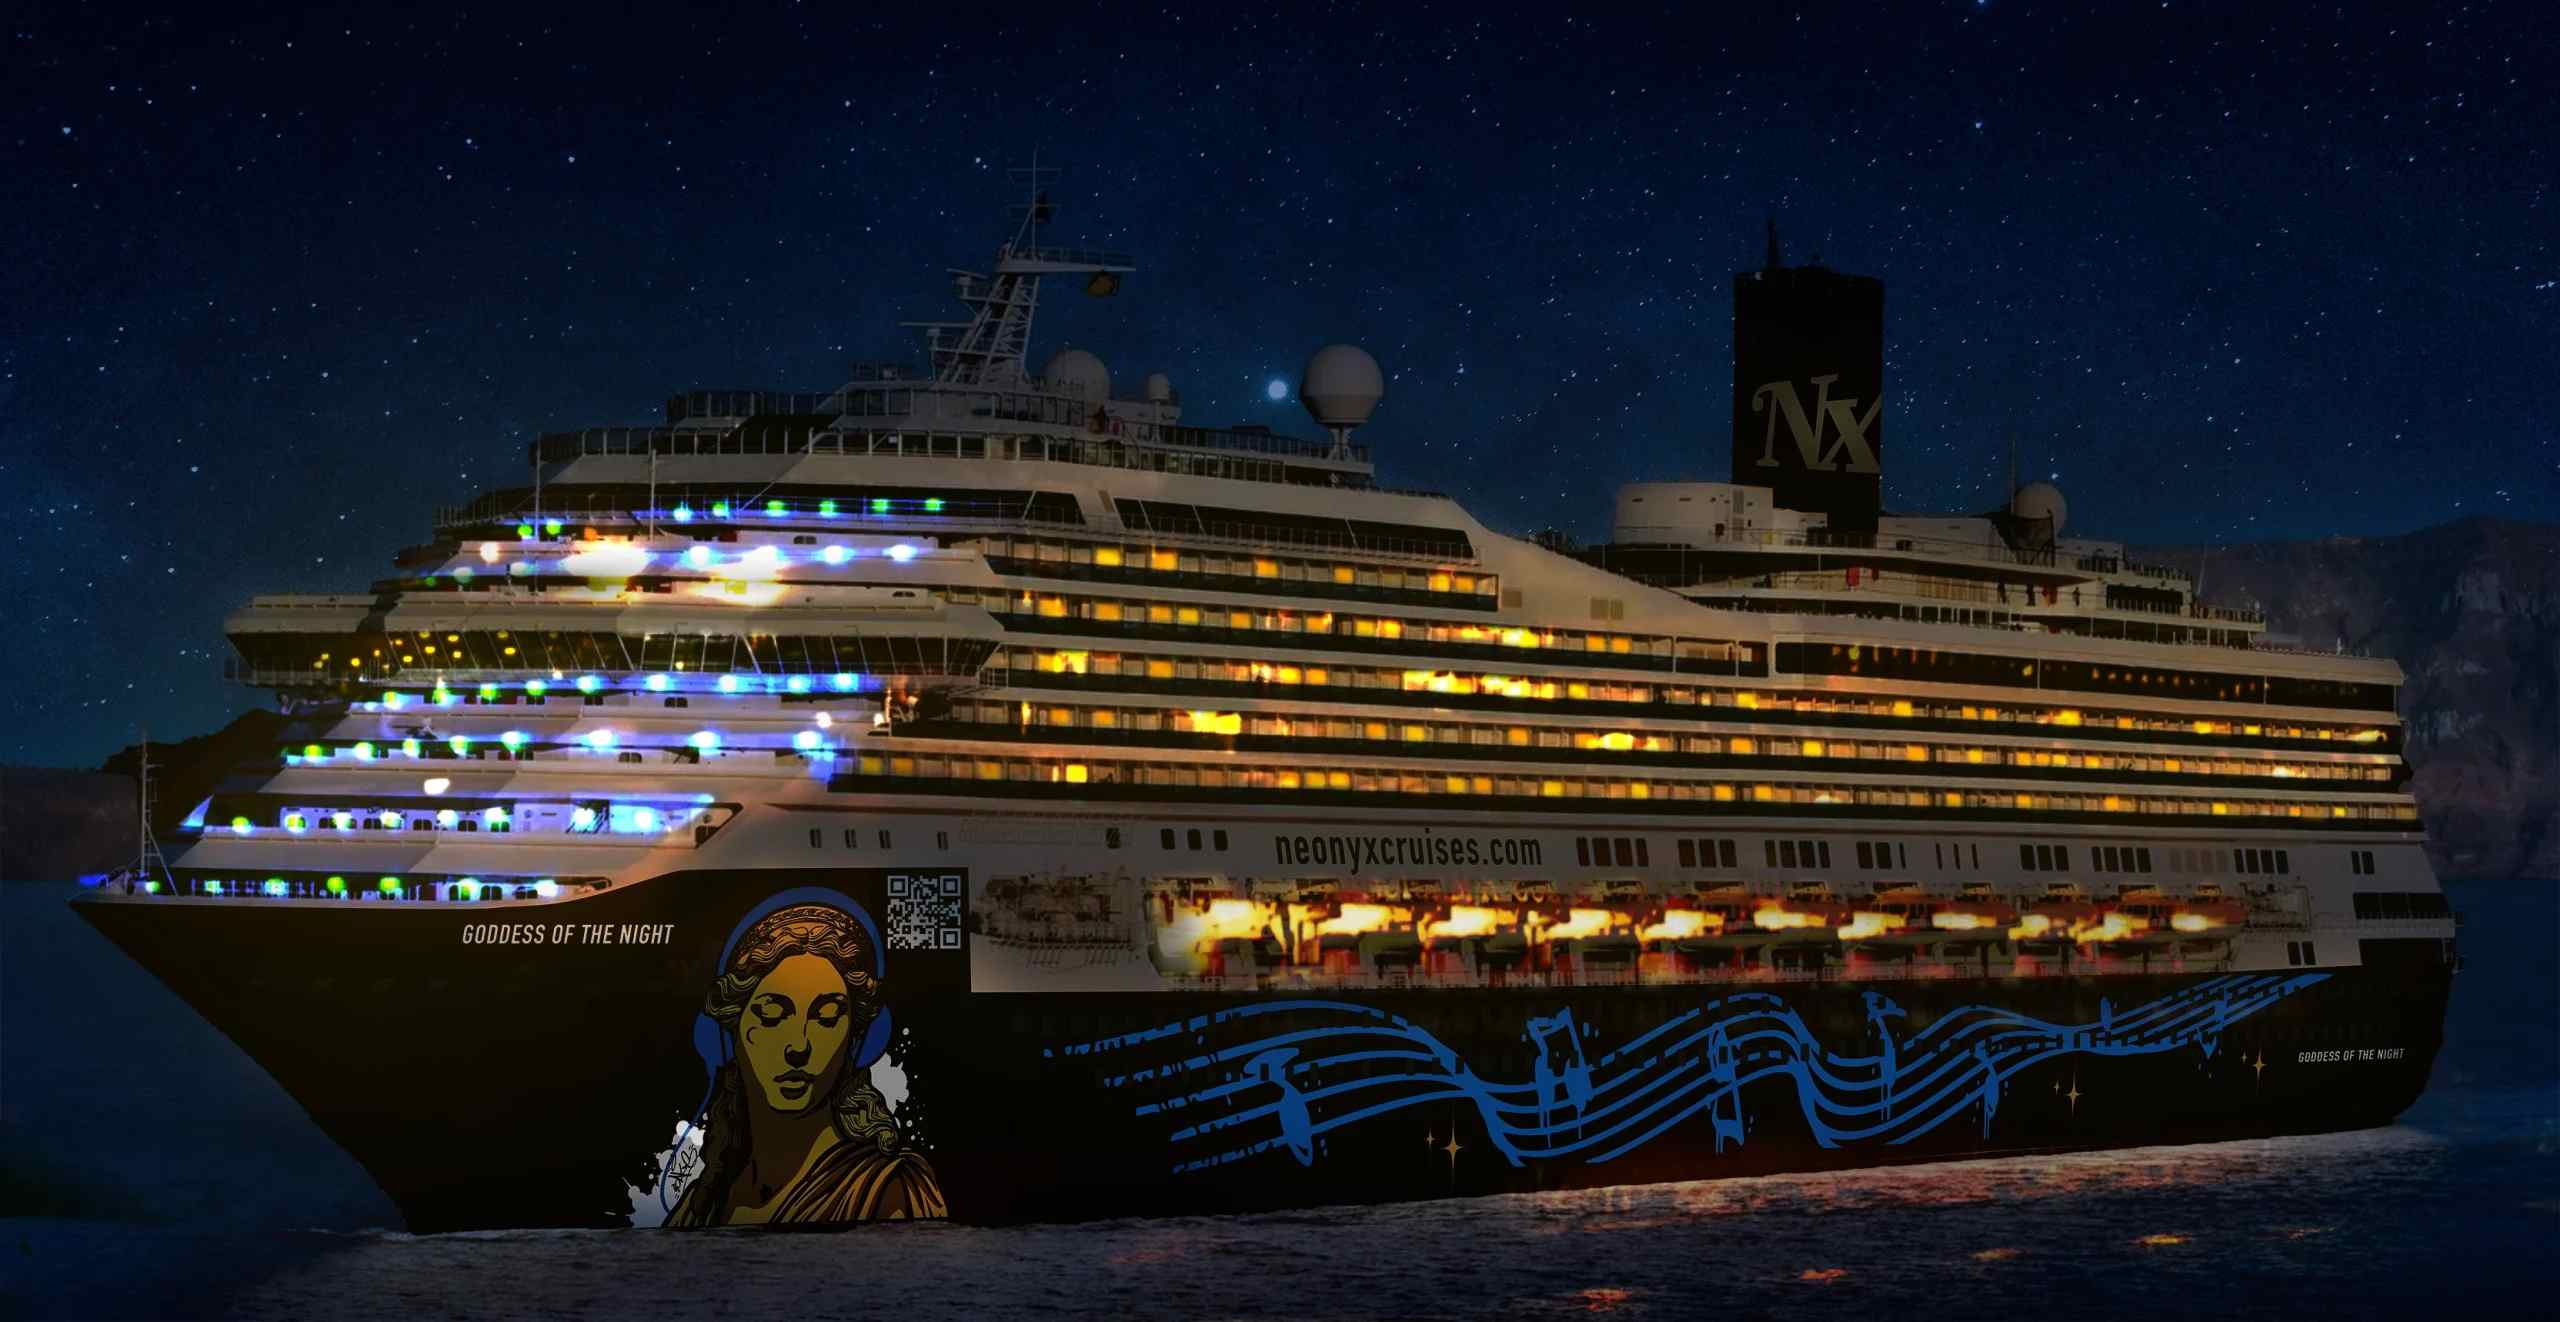 Neonyx Cruises